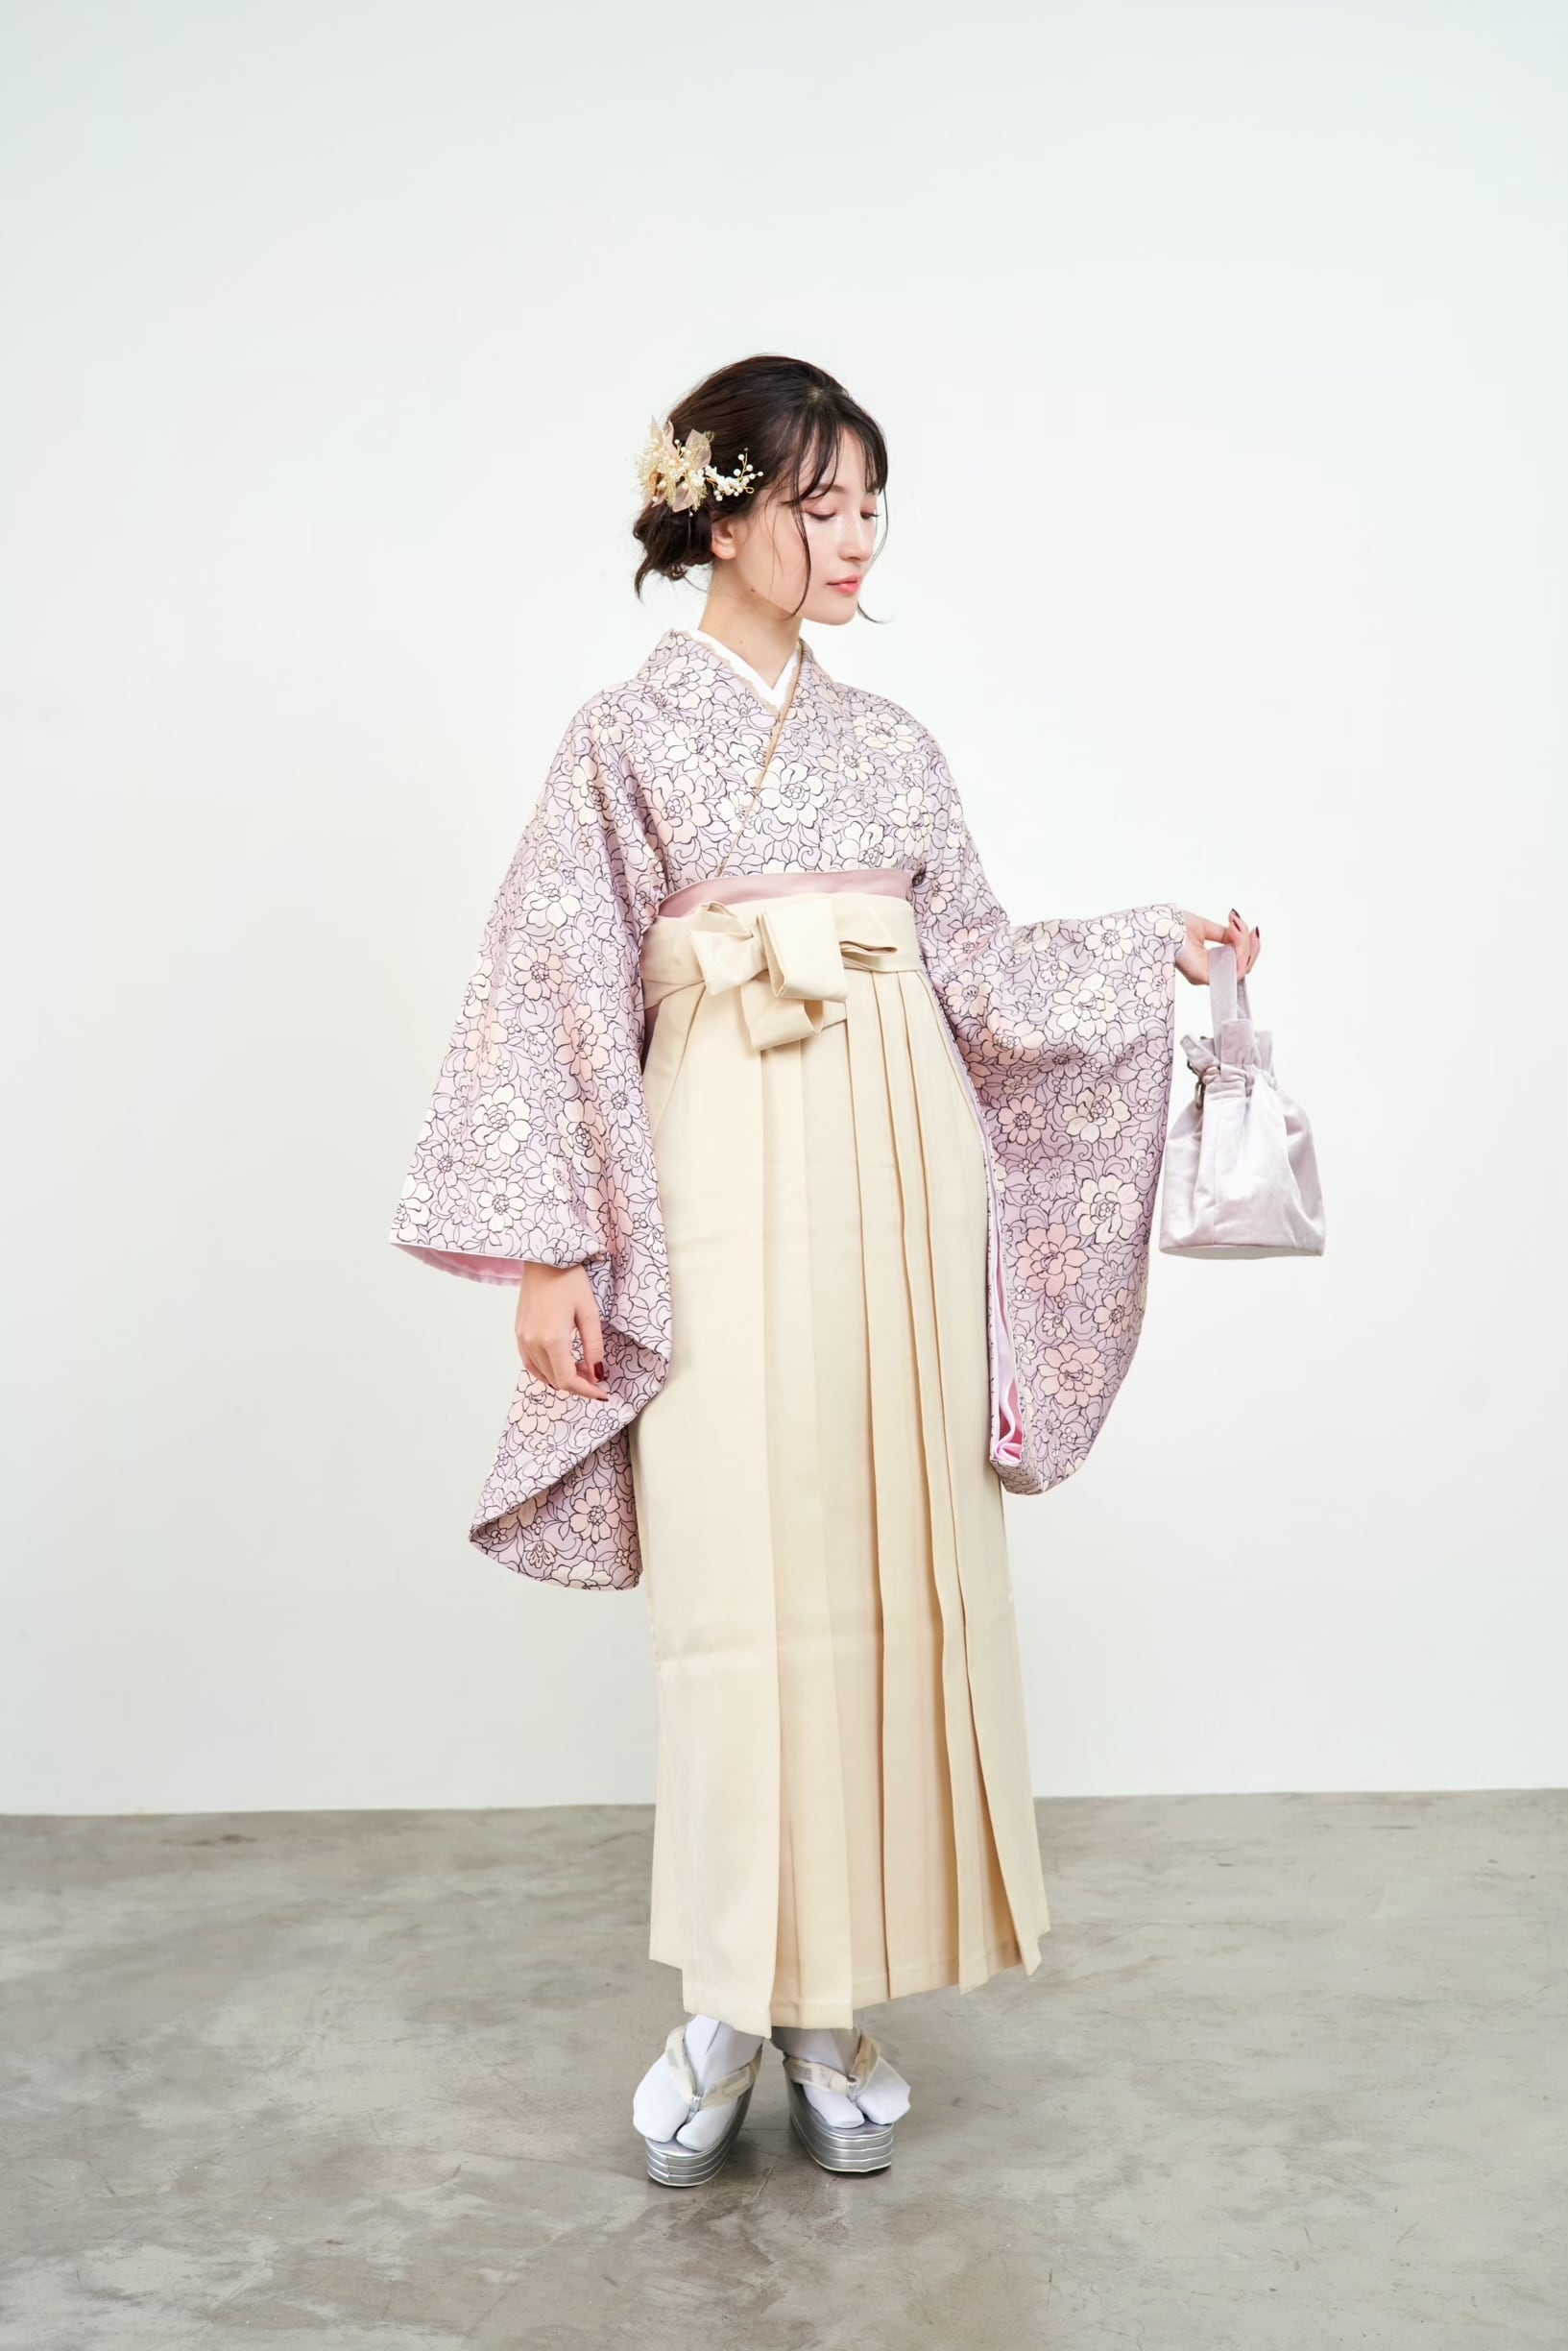 Kimono Sienne 卒業式袴3点セット グレイッシュピンク×アイボリー 袴 二尺袖着物 袴 卒業式 | Kimono Sienne